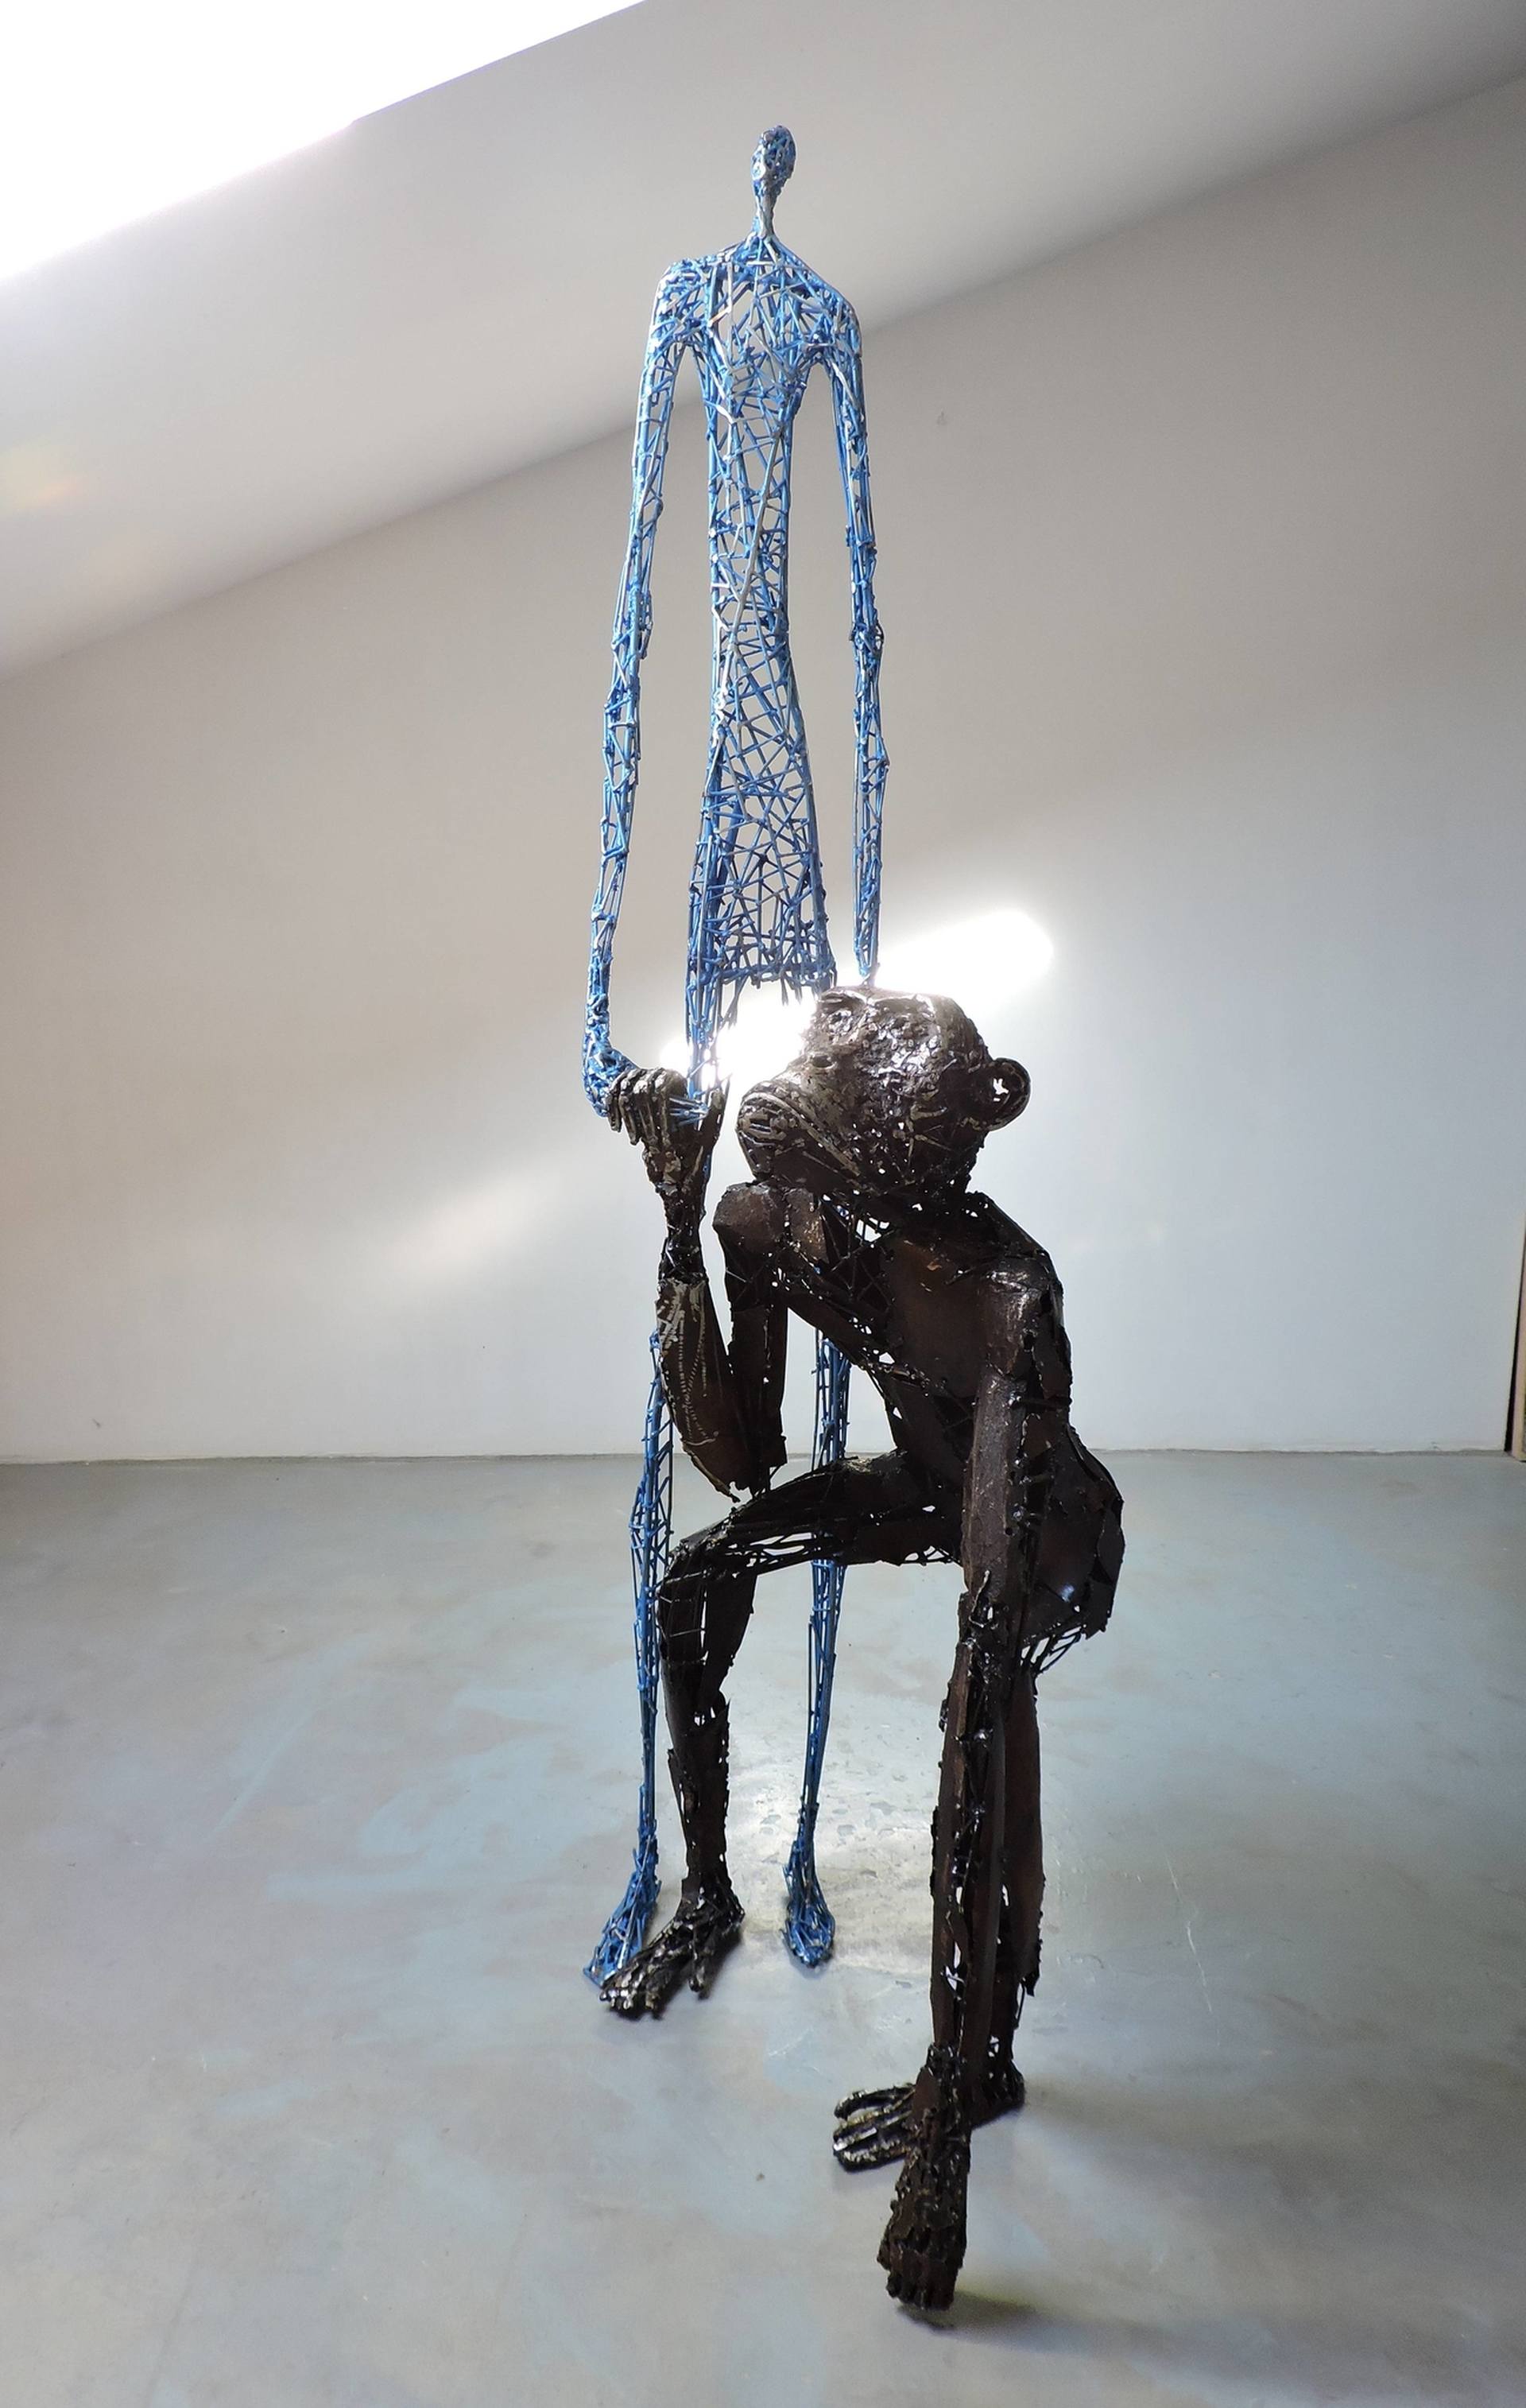 Futuristic Figures From Wire Sculpture Artist Michele Rizzi